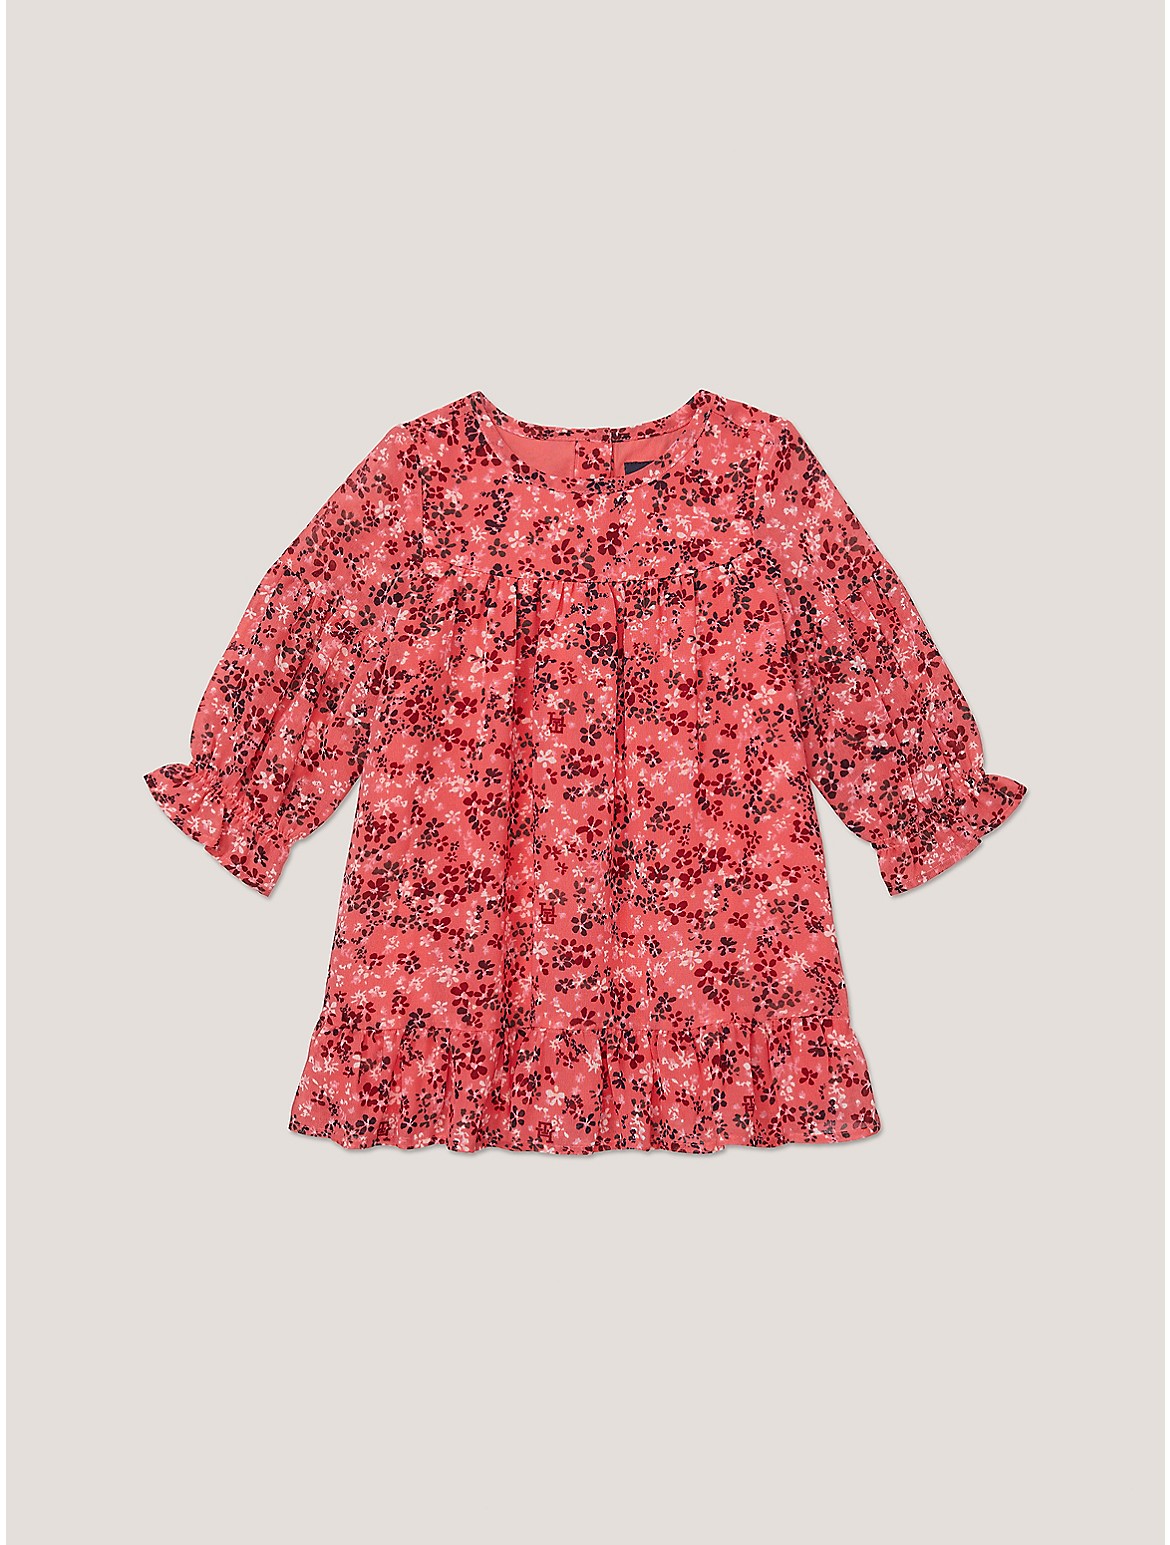 Tommy Hilfiger Girls' Babies' Floral Print Dress - Pink - 12M